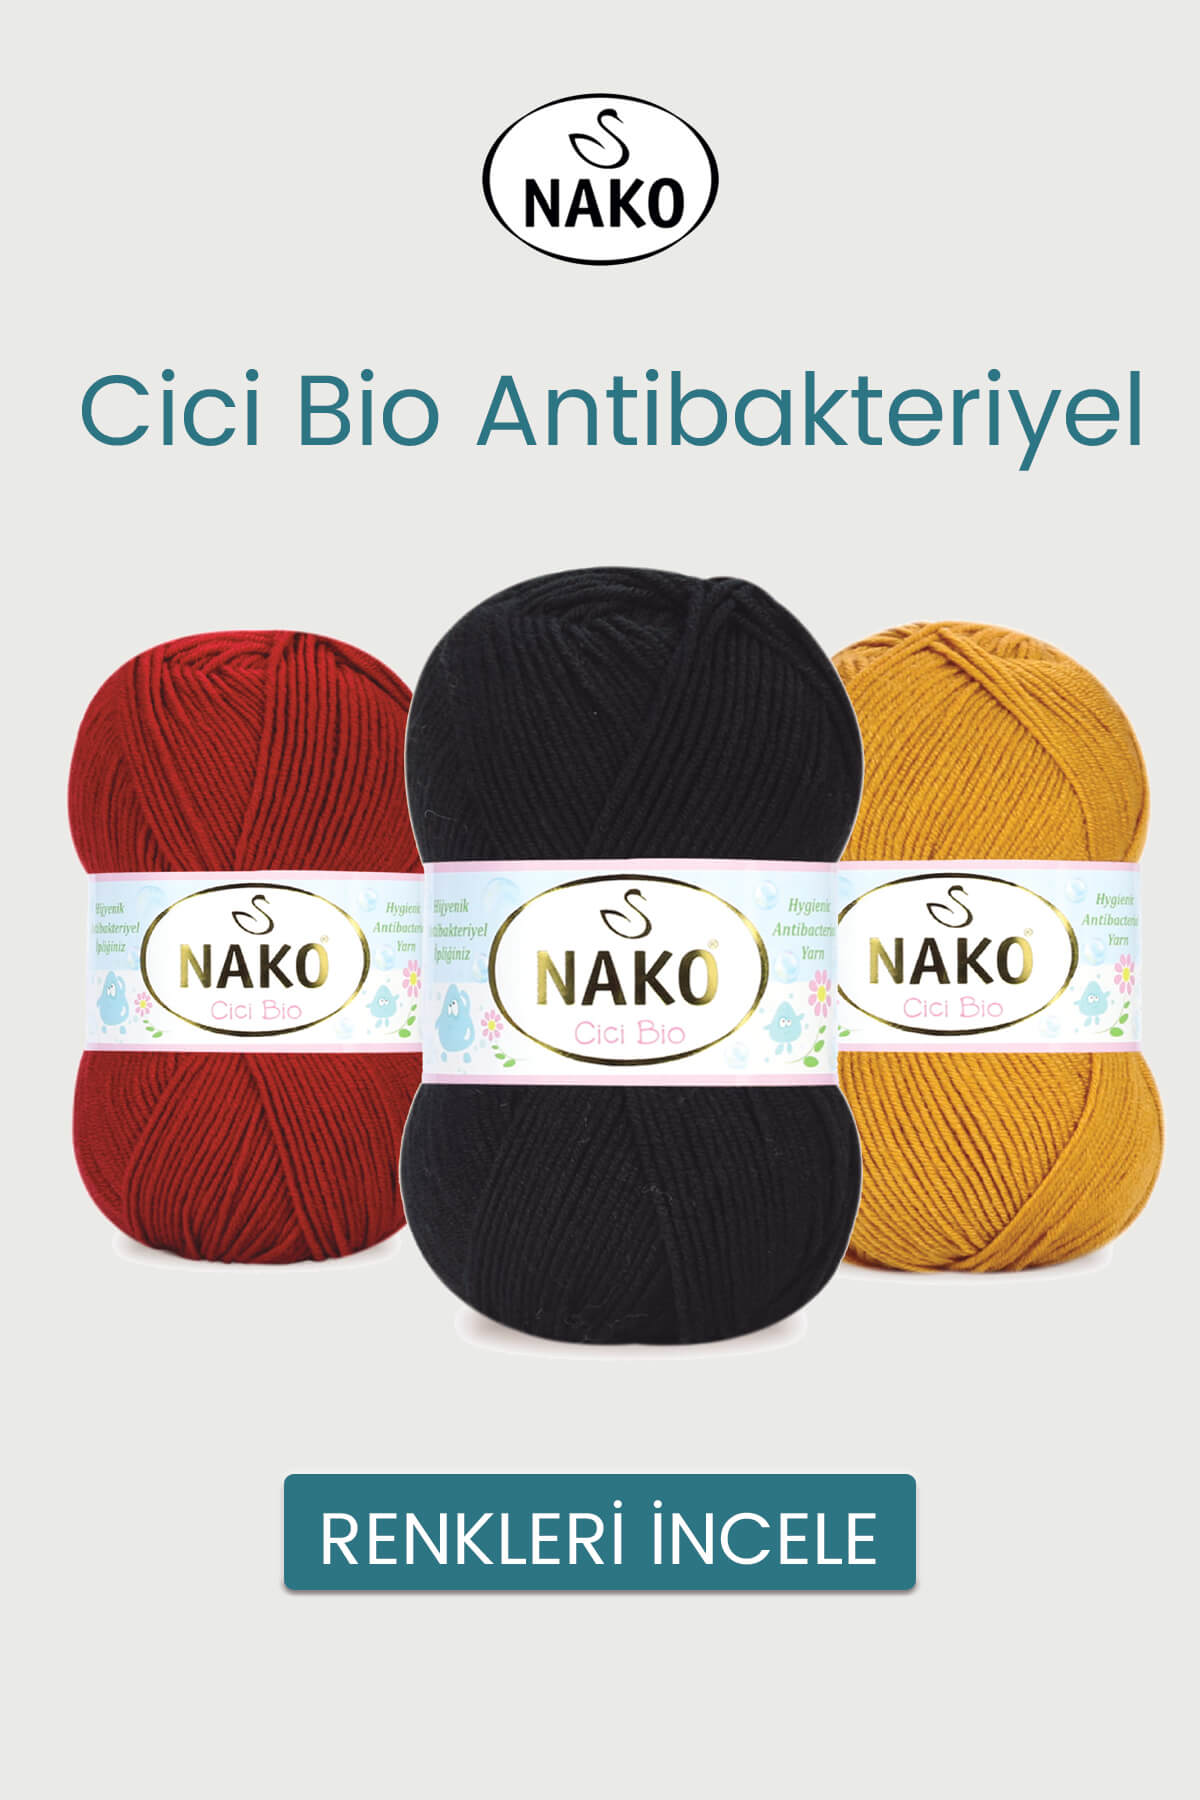 nako-cici-bio-anktibakteriyel-tekstilland